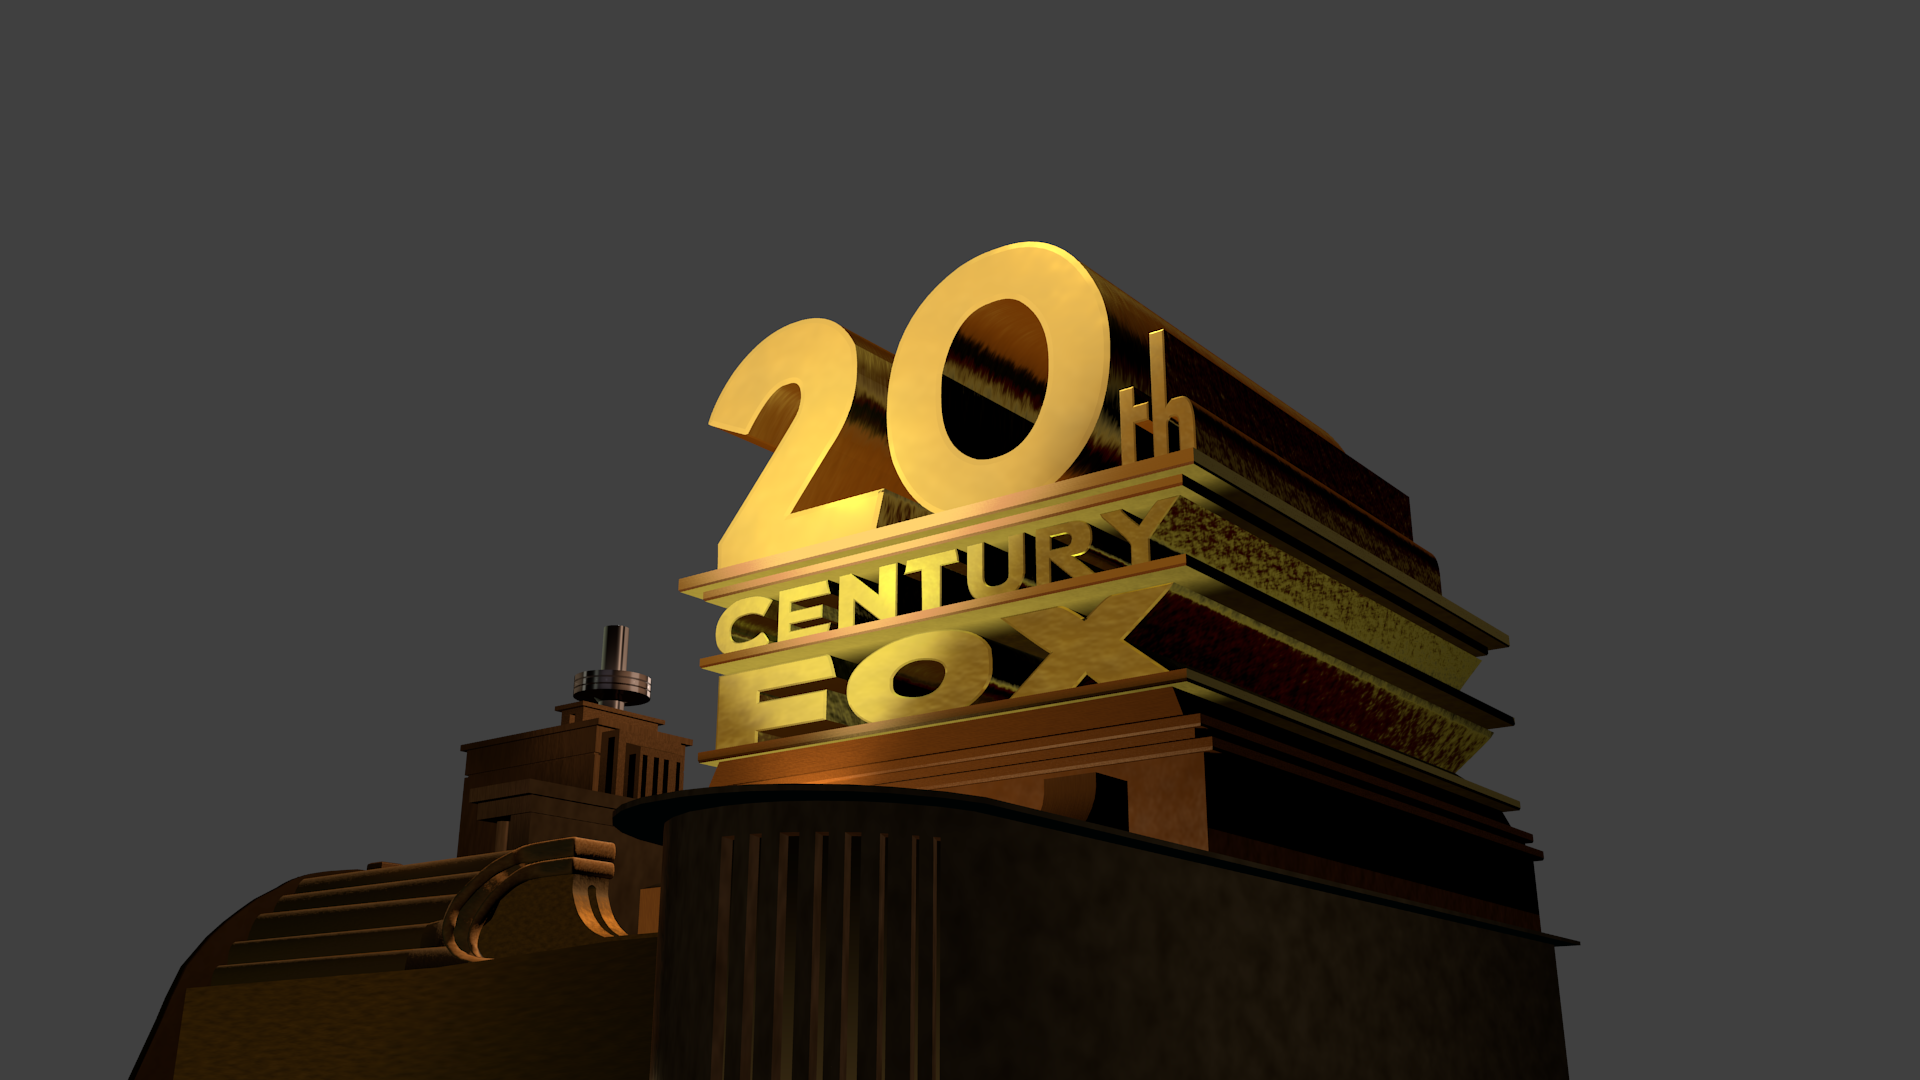 20th Century Fox logo 1994 Remake 2.0 by LogoManSeva on DeviantArt